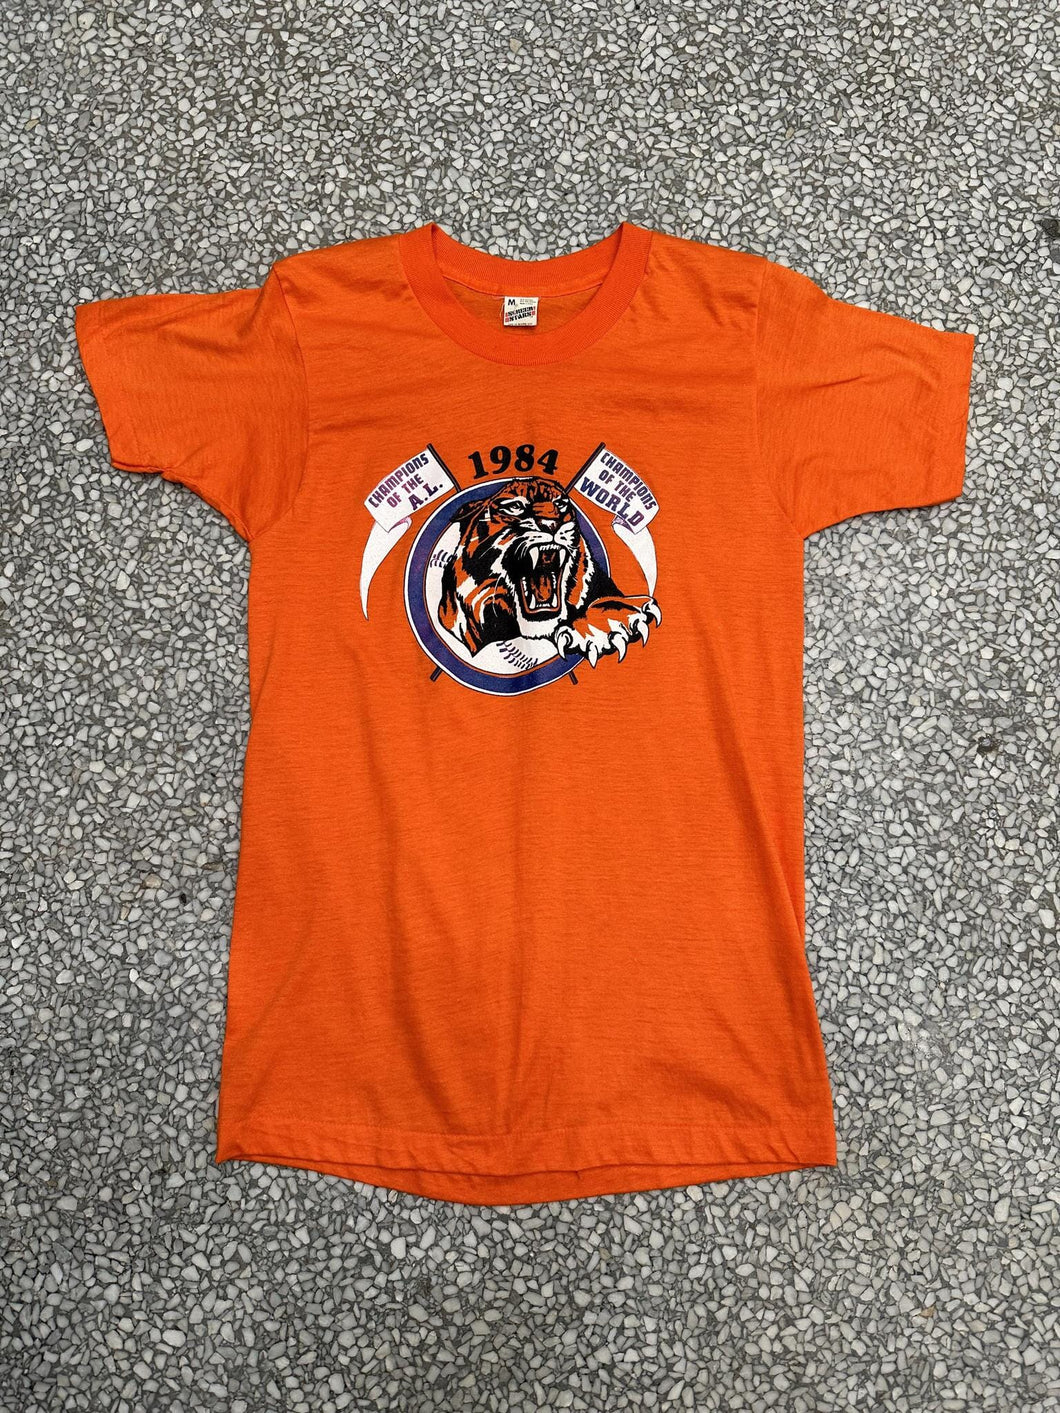 Detroit Tigers Vintage 1984 Roaring Tiger Champions Paper Thin Orange ABC Vintage 